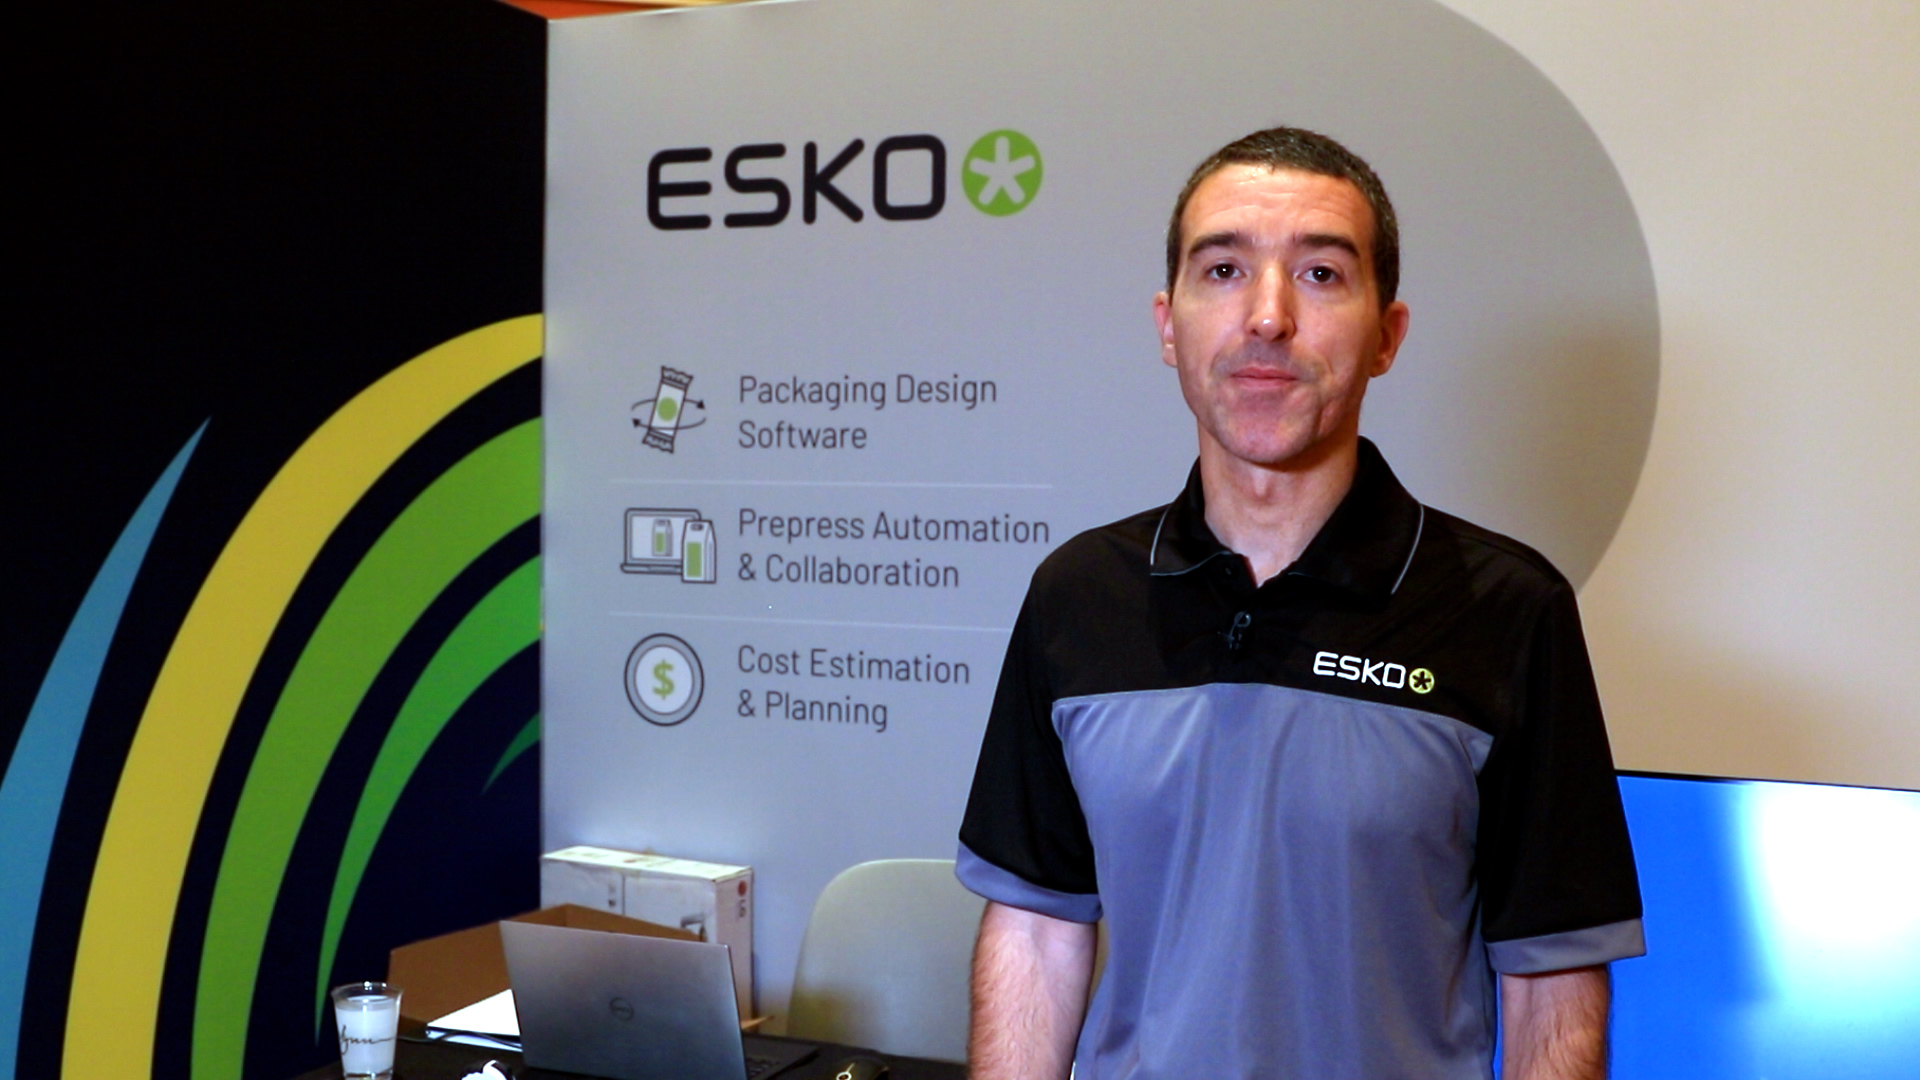 Esko’s Adam Toqe on Packaging Workflow Automation